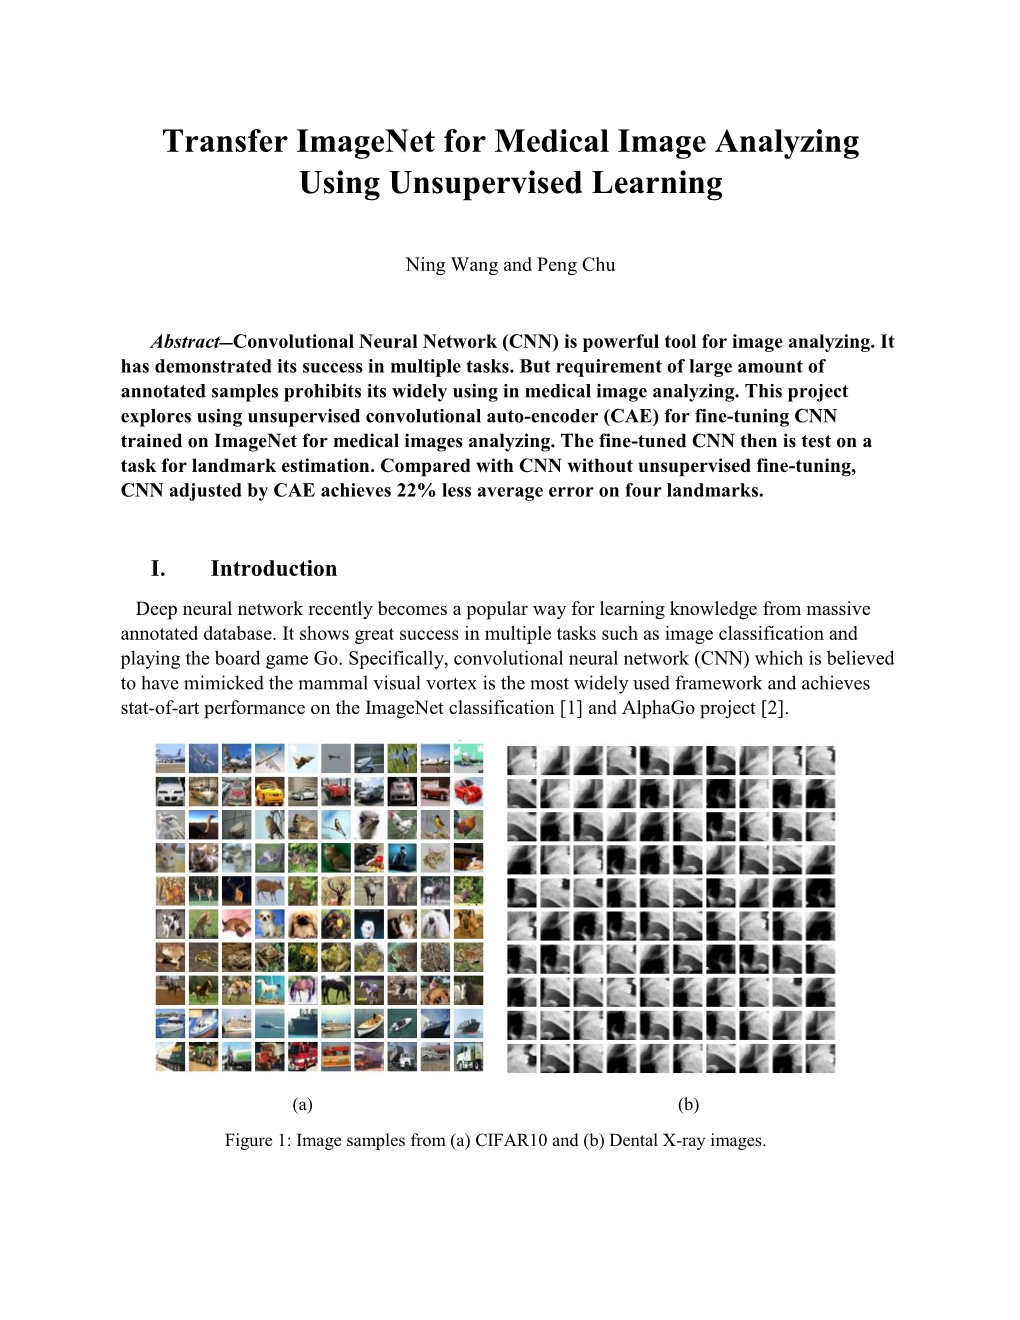 Transfer Imagenet for Medical Image Analyzing Using Unsupervised Learning